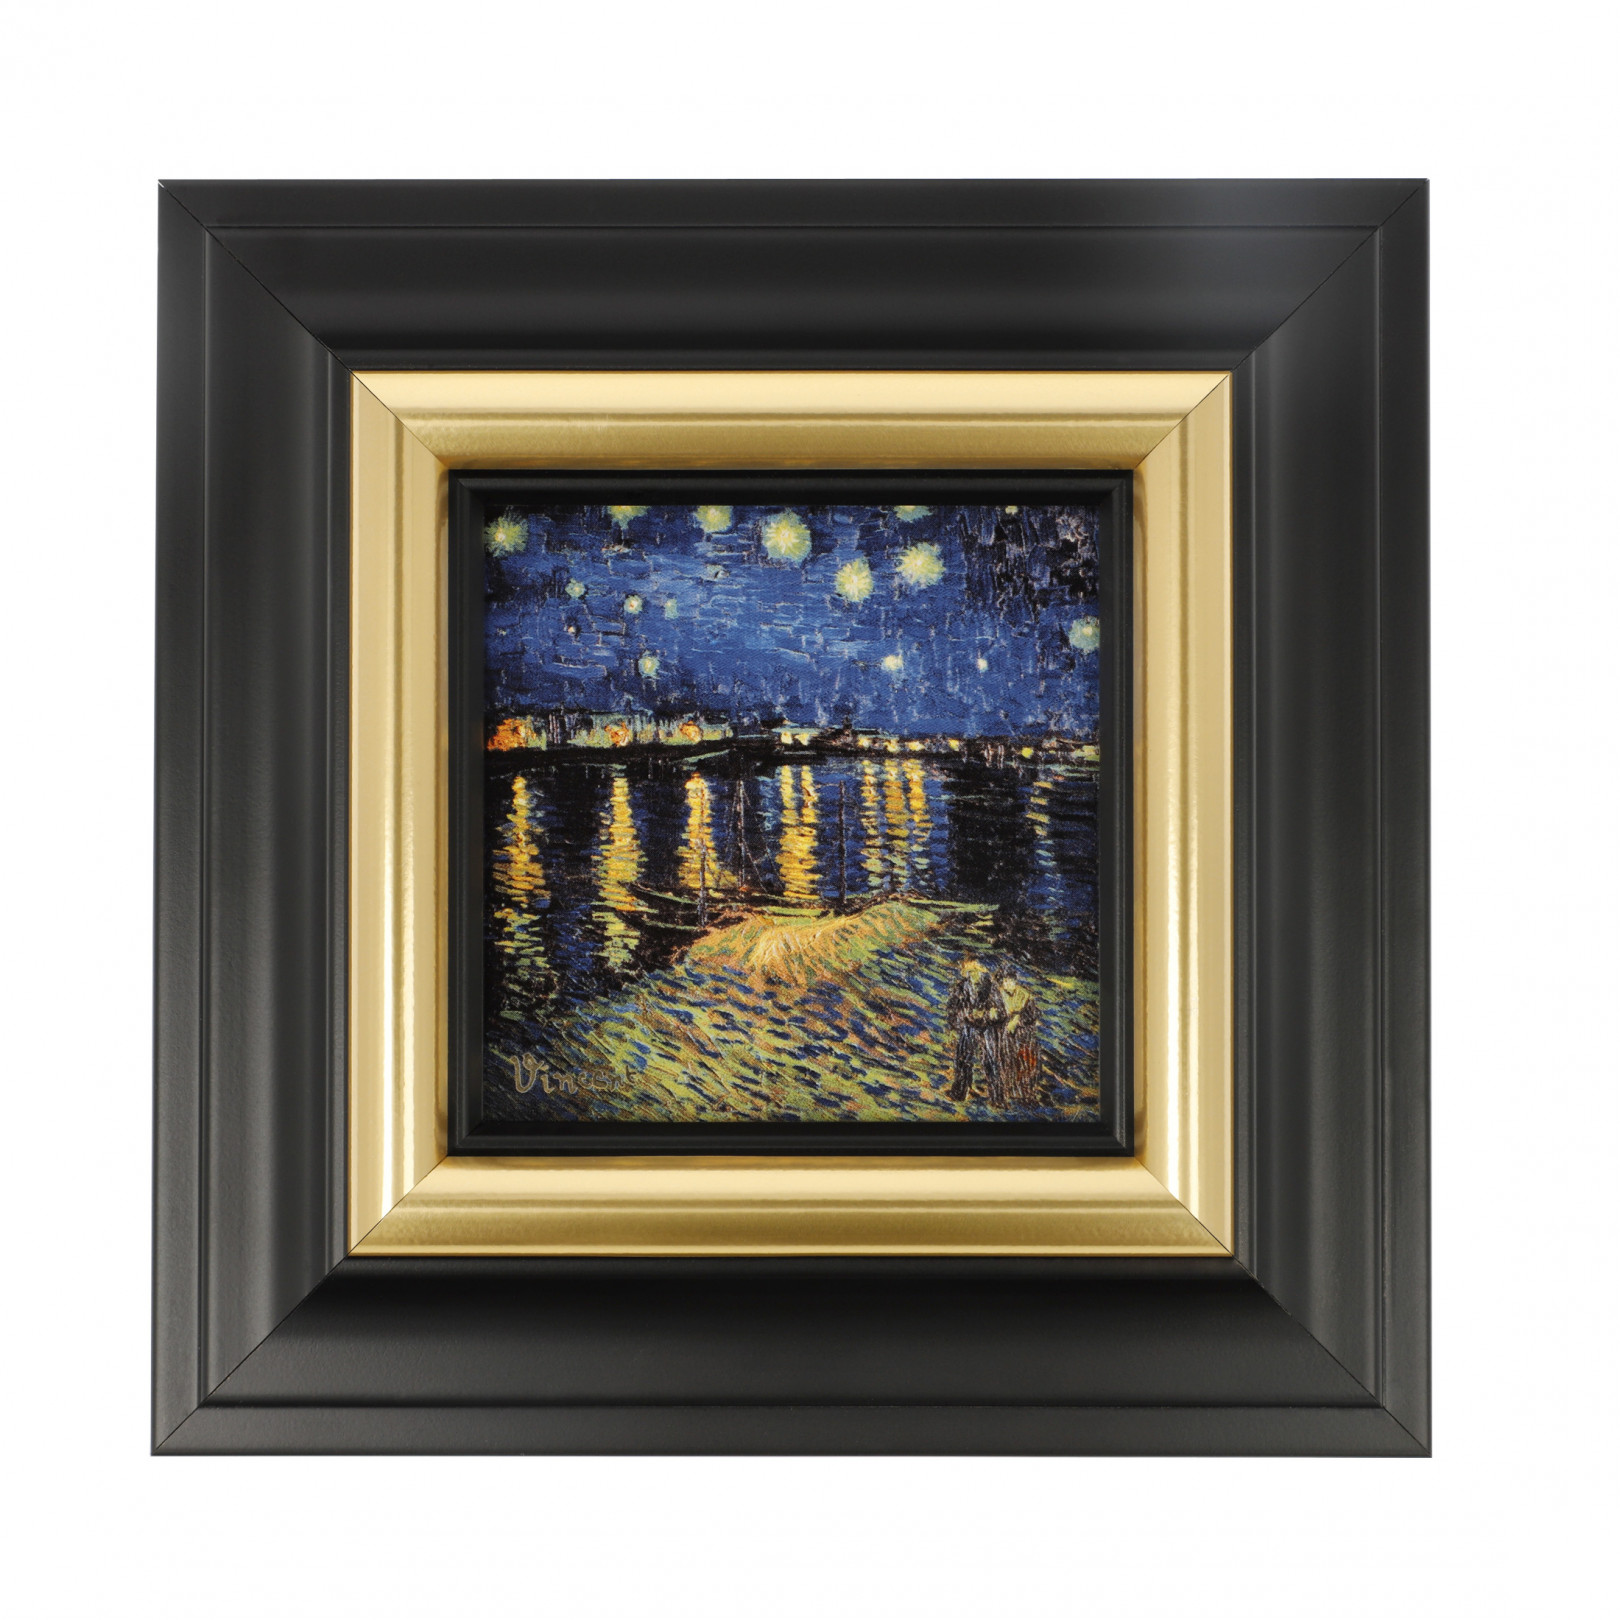 Obraz na porcelanie 16 cm V. van Gogh - Gwieździsta noc nad Rodanem - Goebel